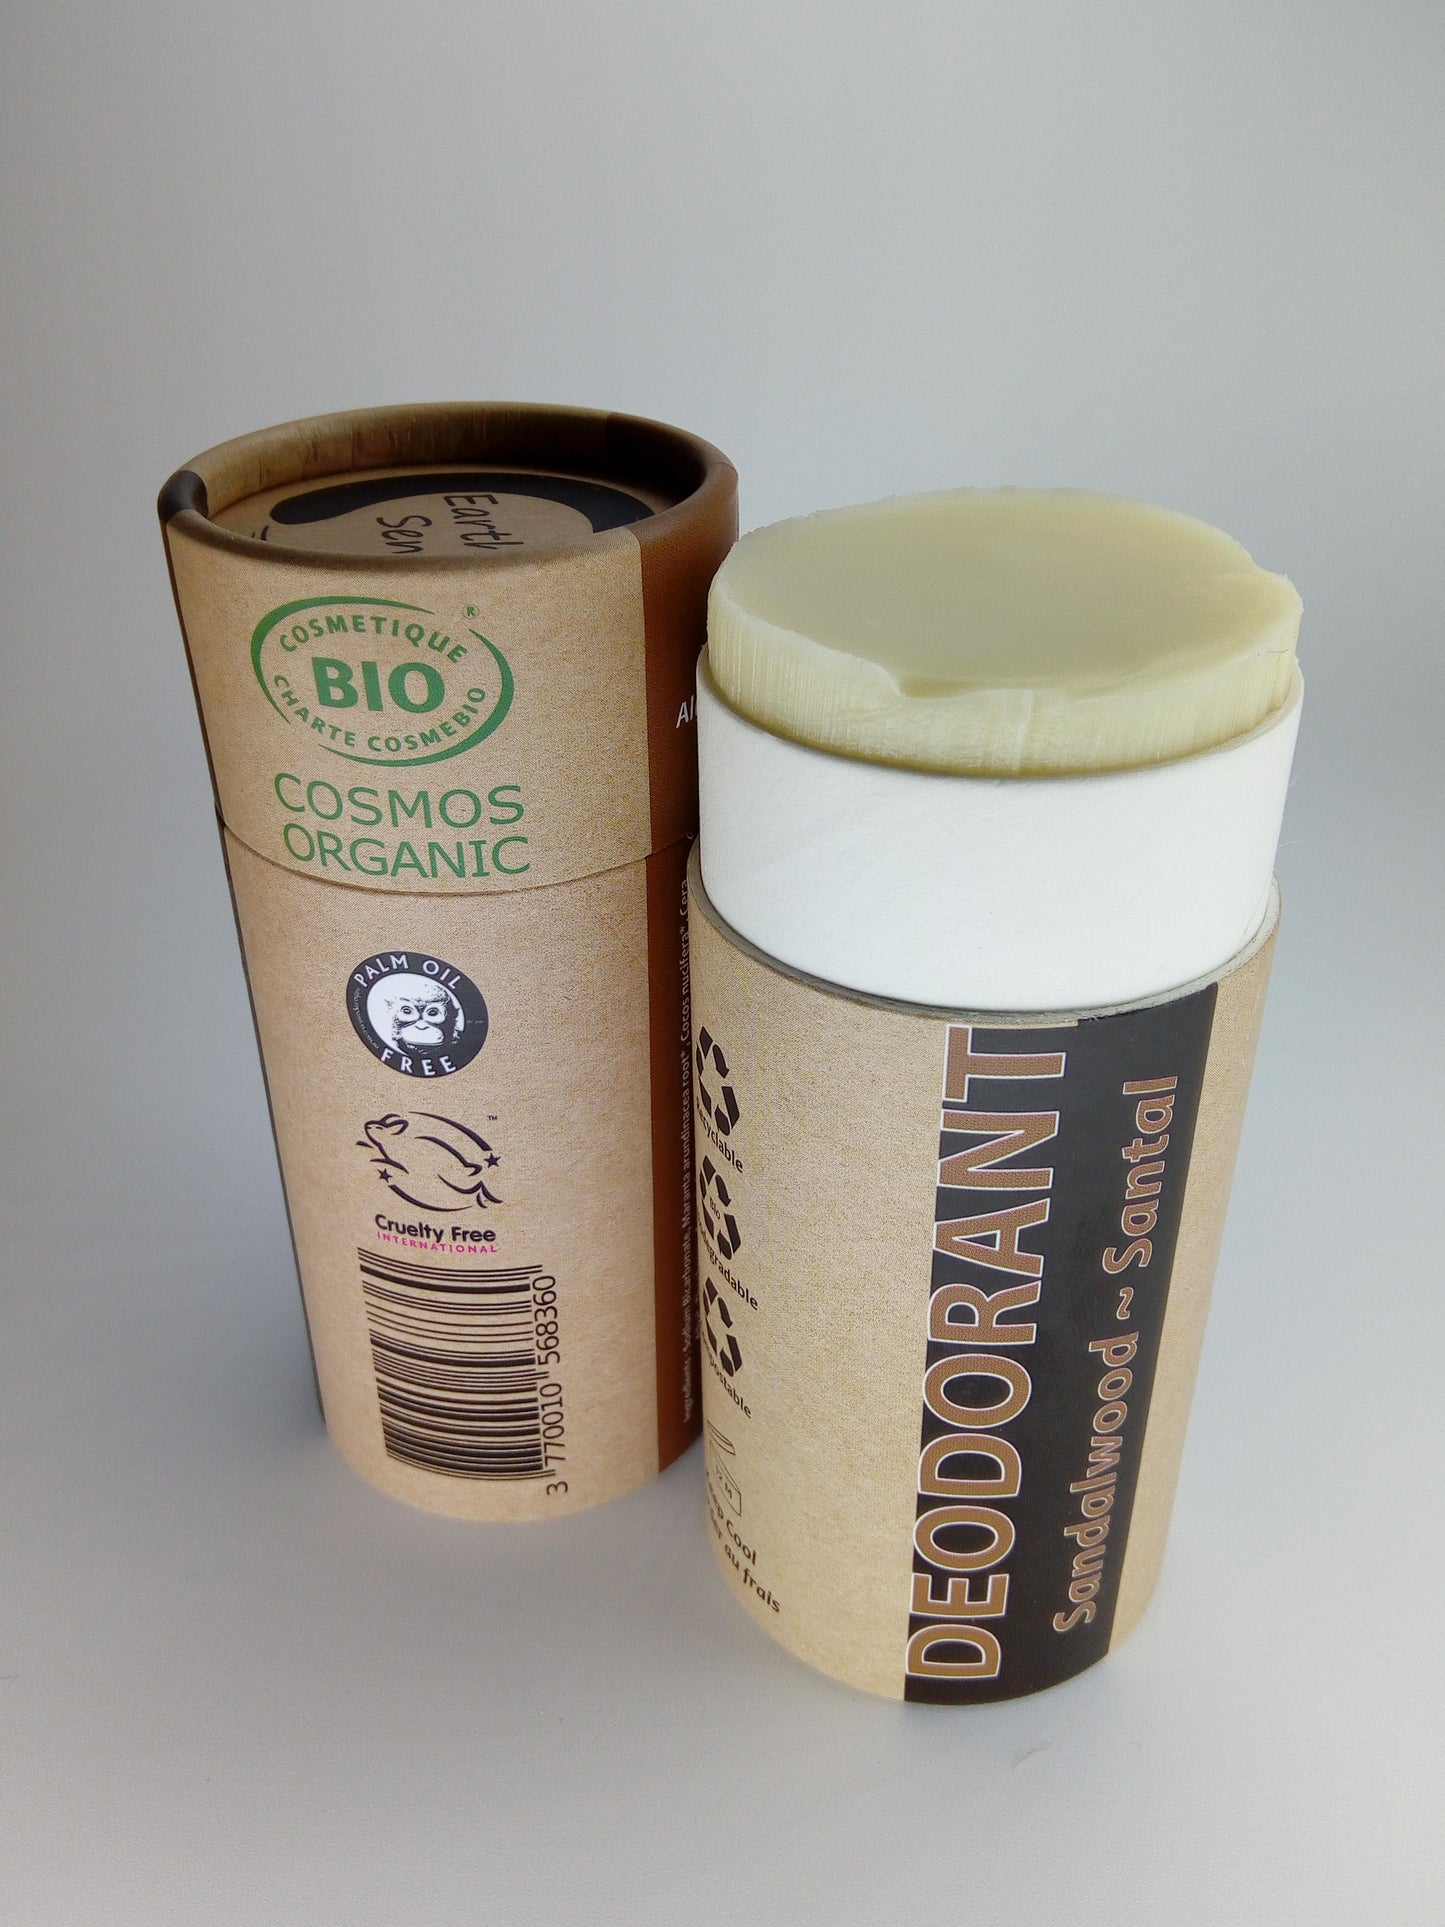 MEGA BUNDLE - 12 x 100ml Organic Certified Natural Deodorant. 6 of each type - 2 types - Earthsenseorganics